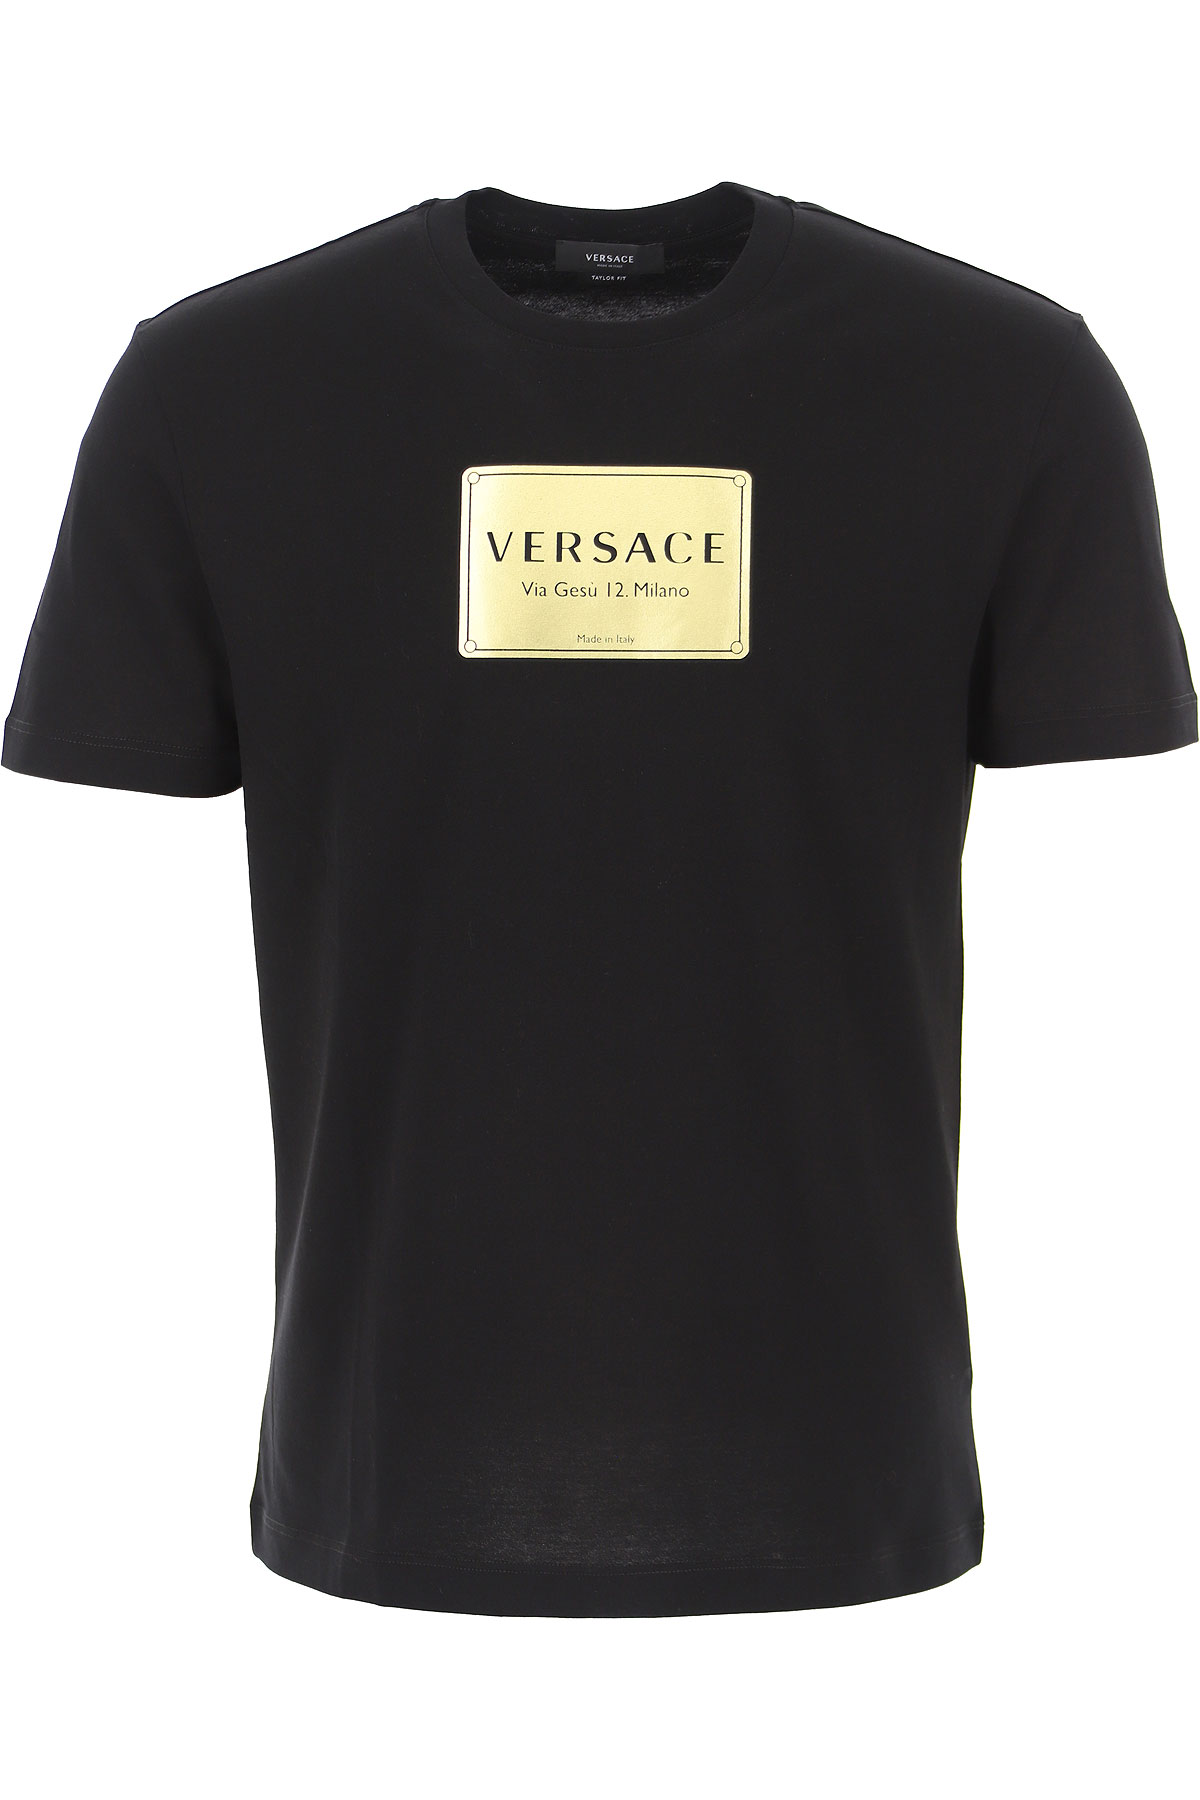 versace sale t shirt